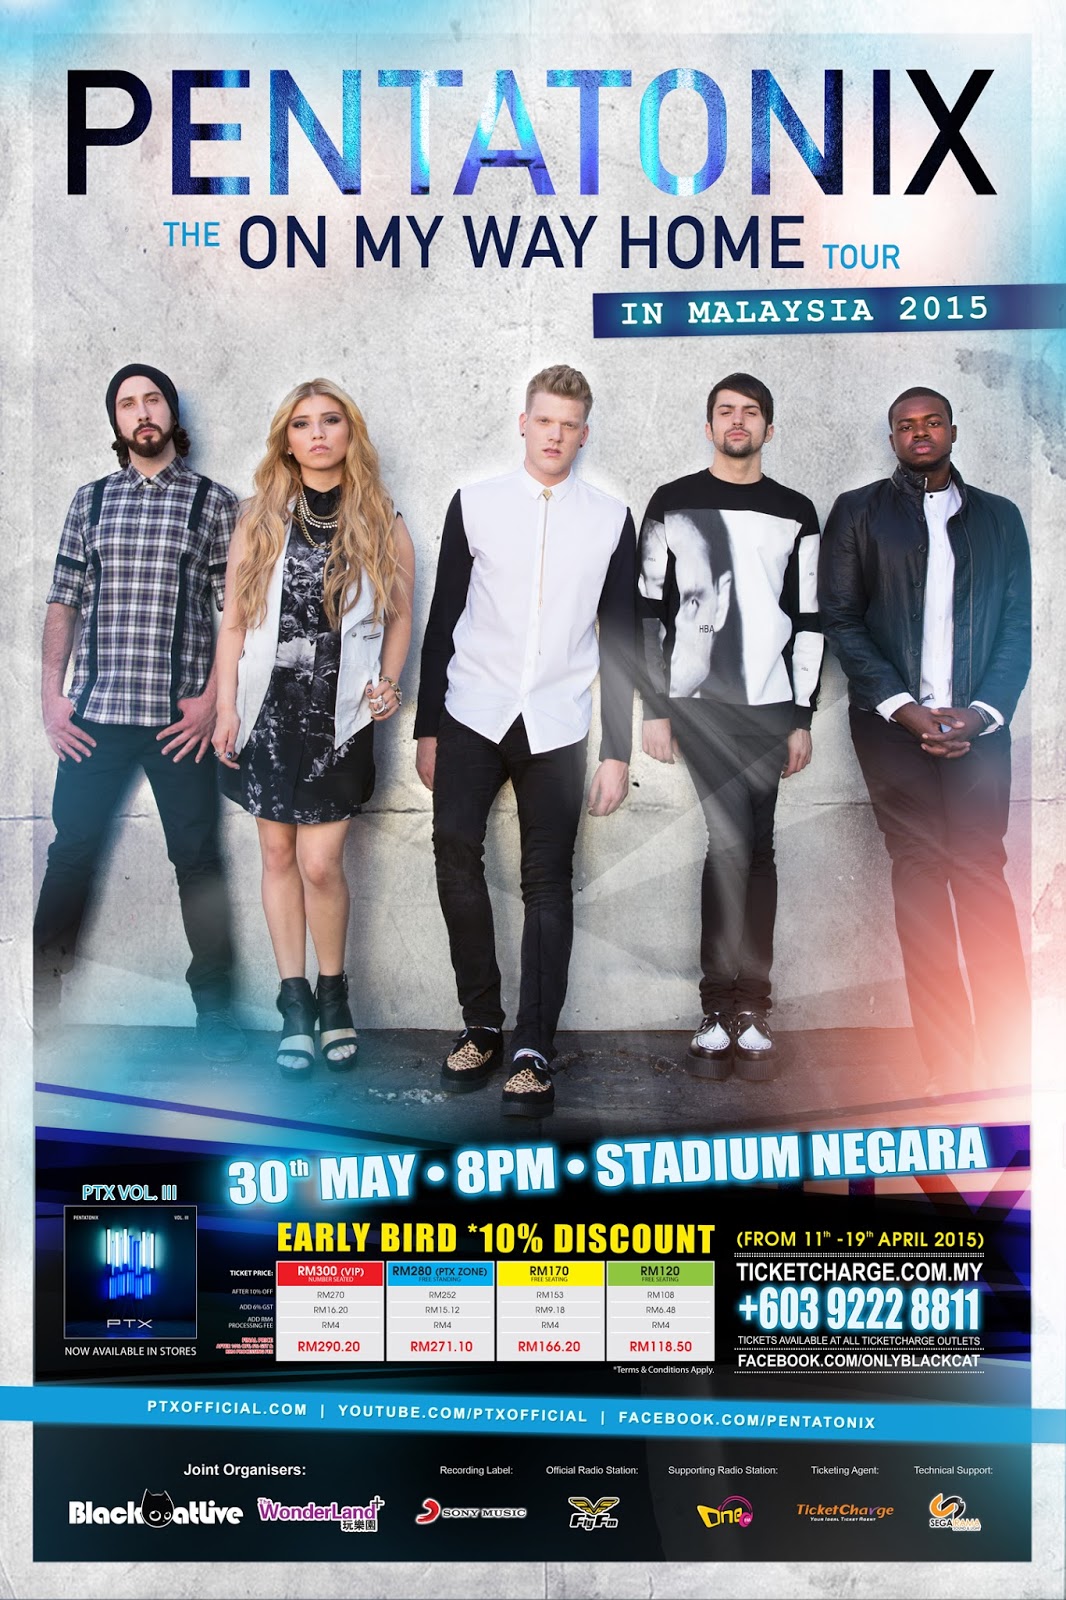 PENTATONIX Live in Malaysia 2015 - The On My Way Home Tour 30th May 8PM @ Stadium Negara